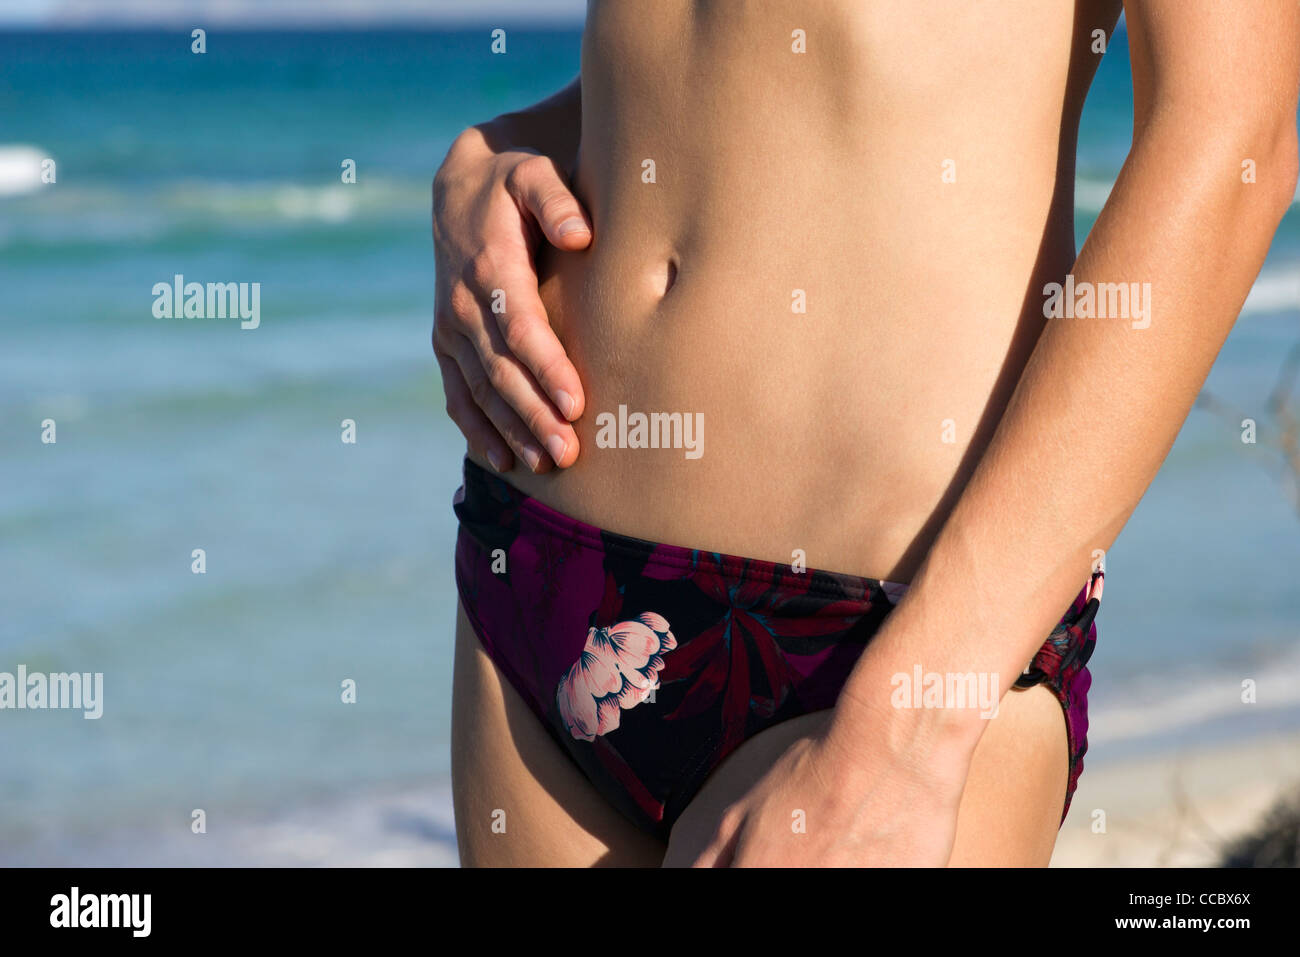 Woman in bikini bottom, mid section Stock Photo